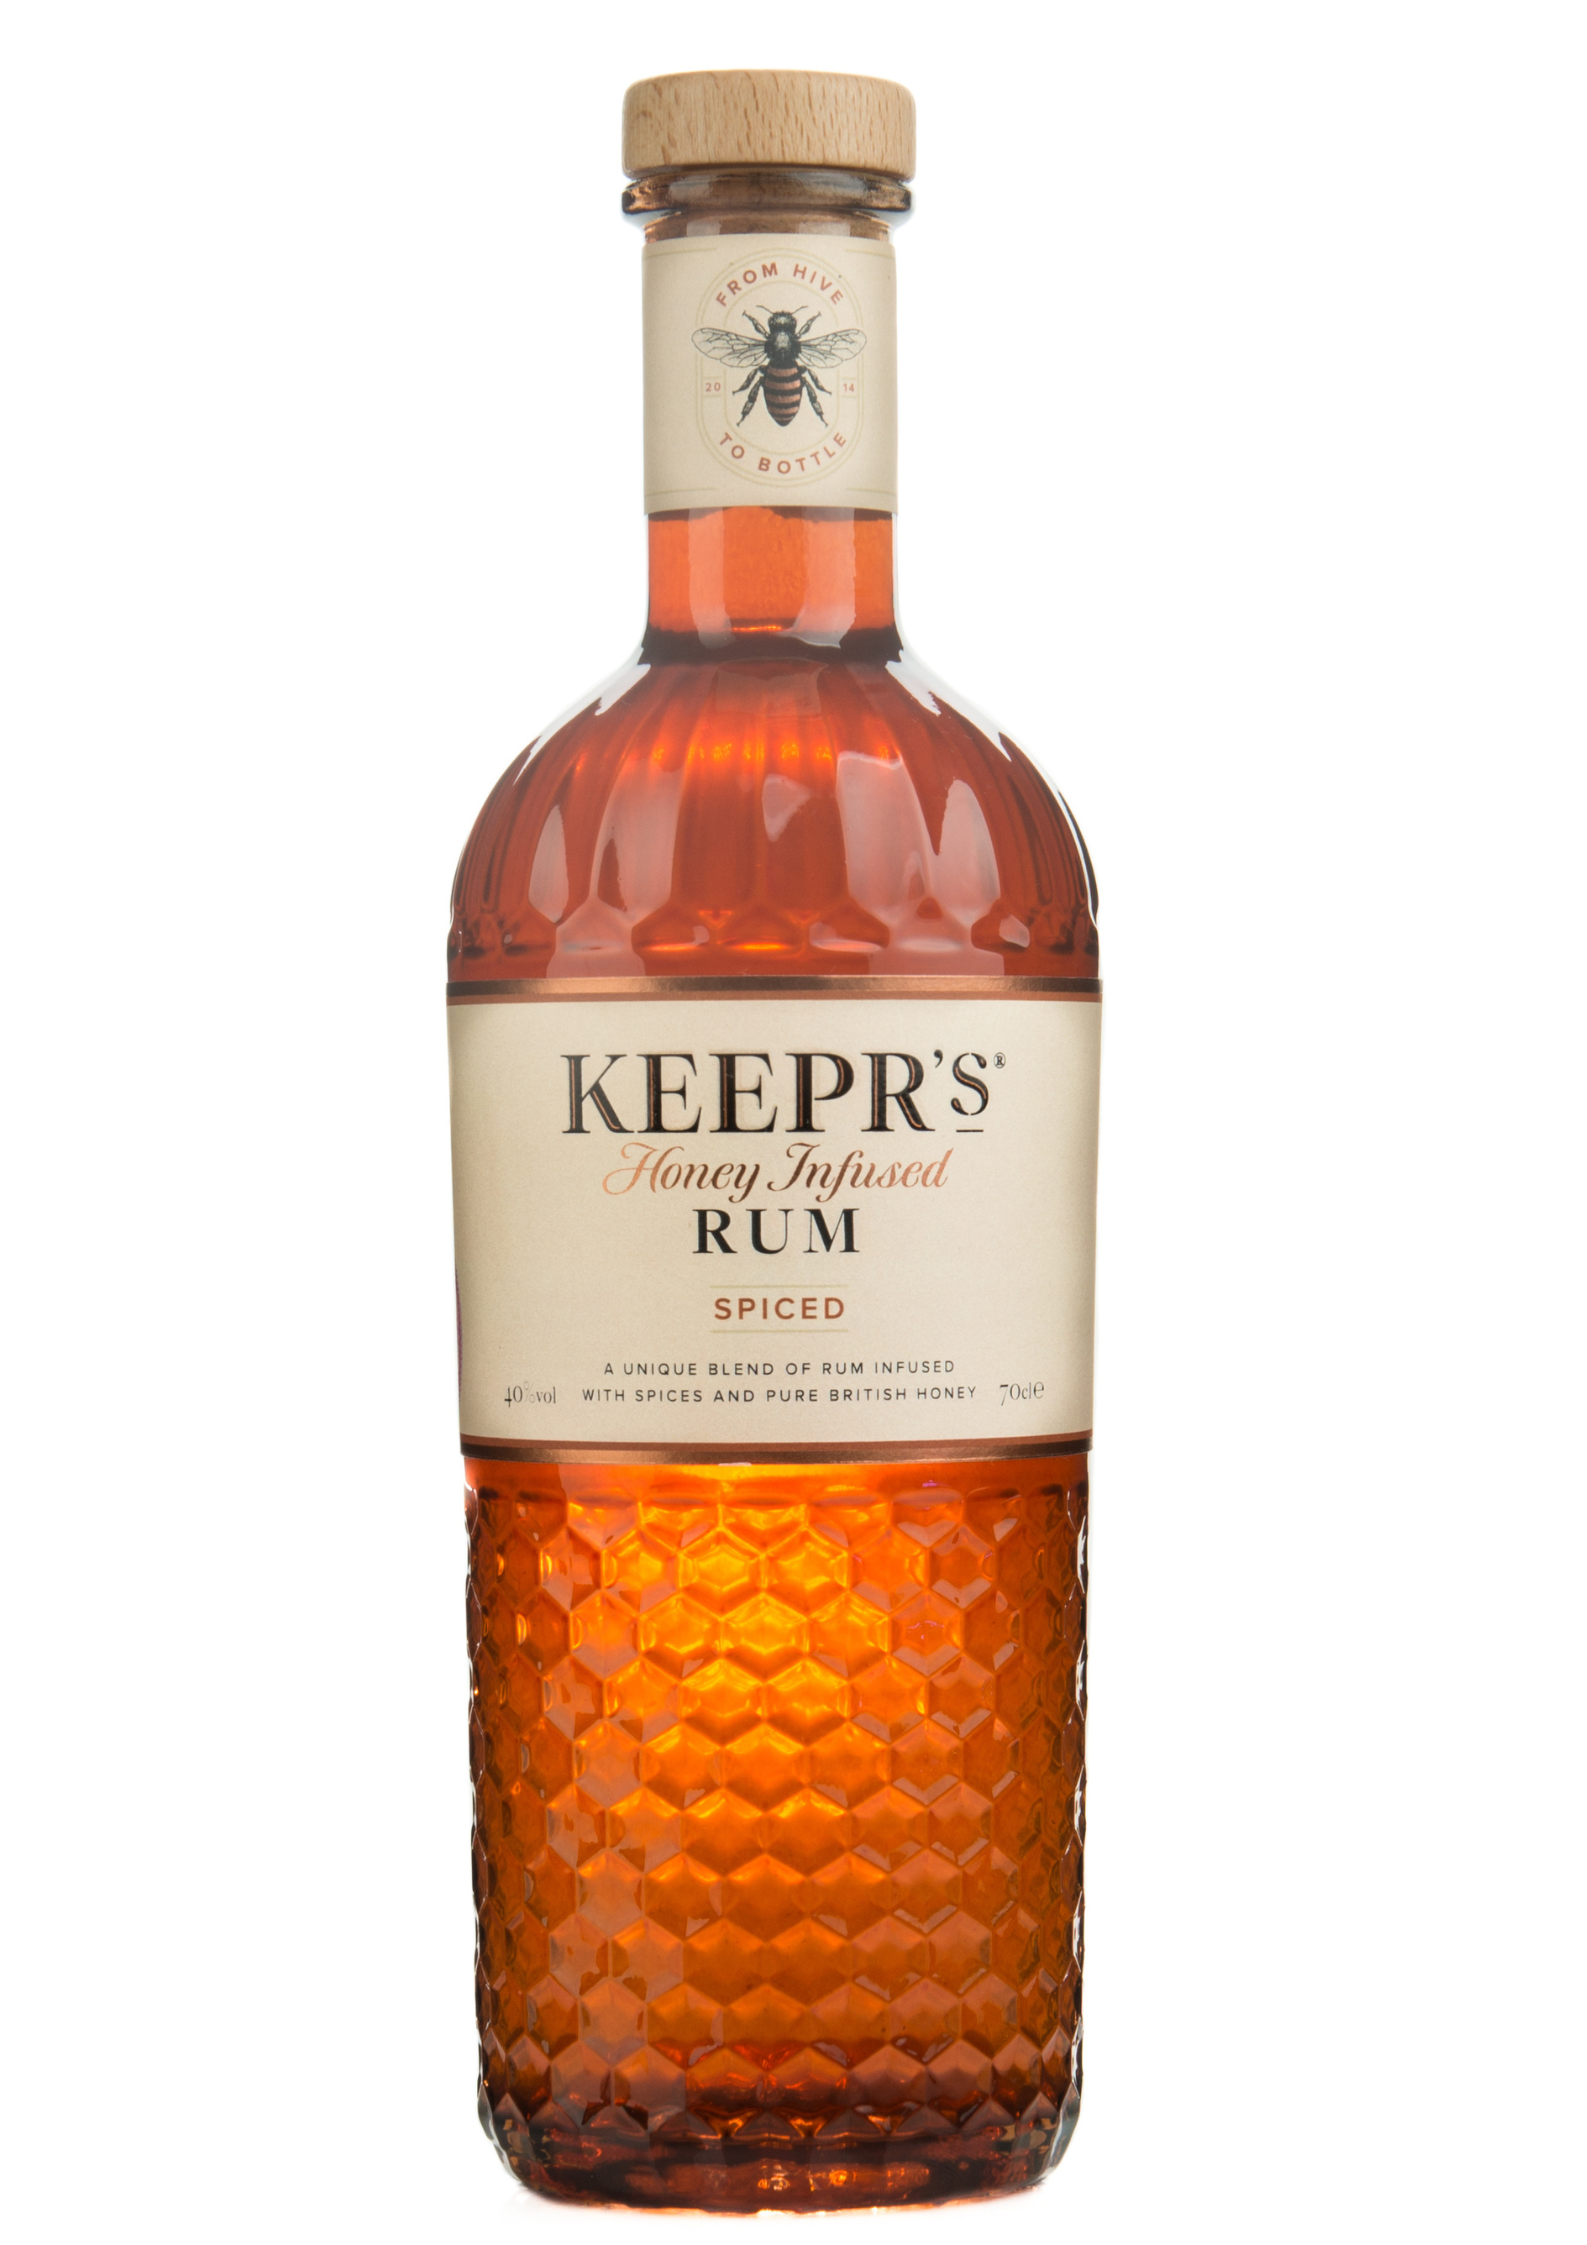 Bottle of Keepr's Honey Infused Spiced Rum, 40% - The Spirits Room